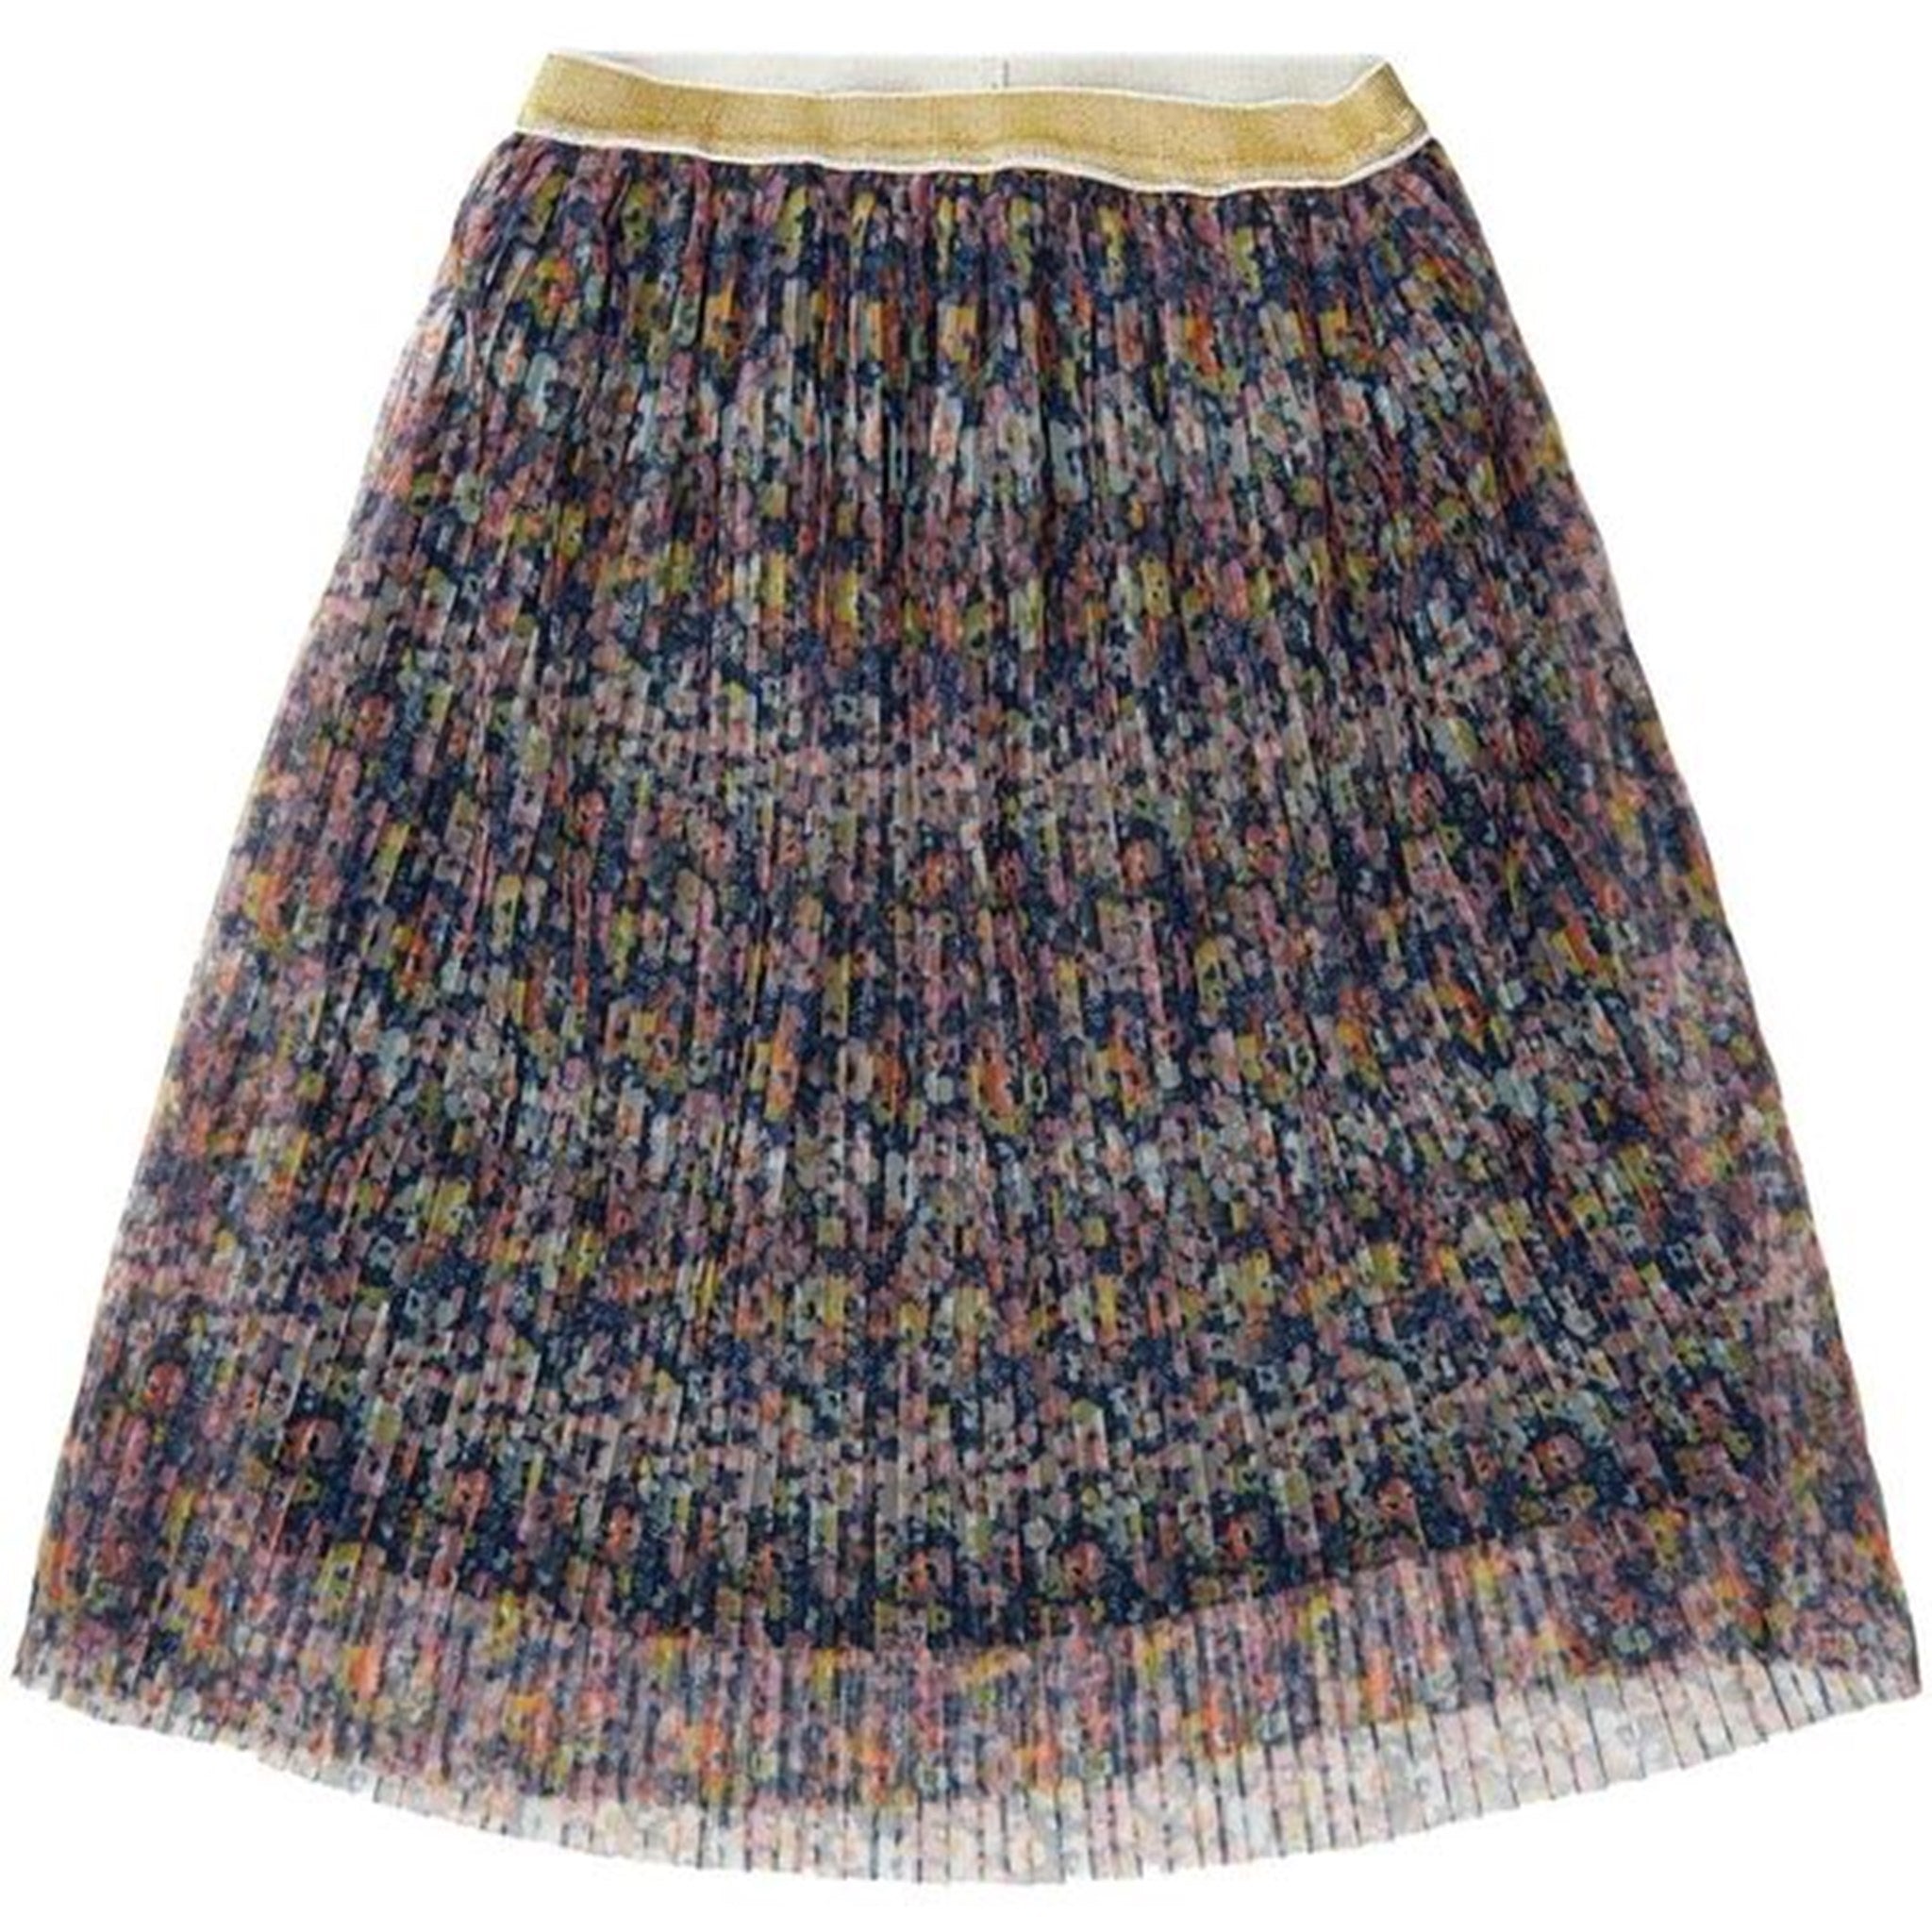 The New Taya Mesh Skirt Floral